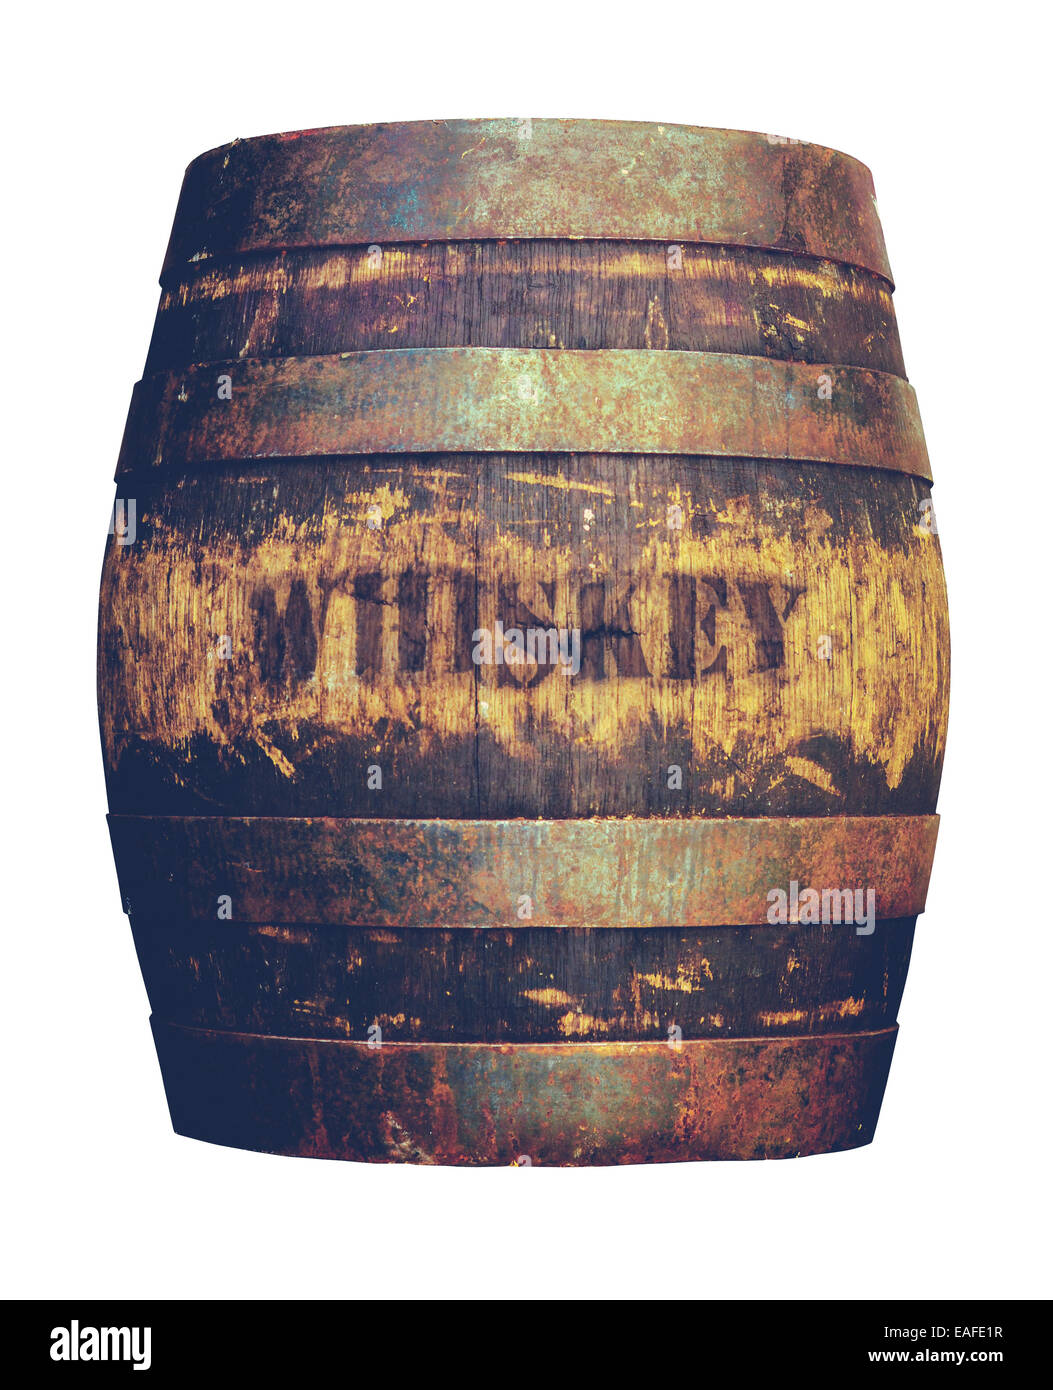 Barril de whisky antiguas de madera Foto de stock